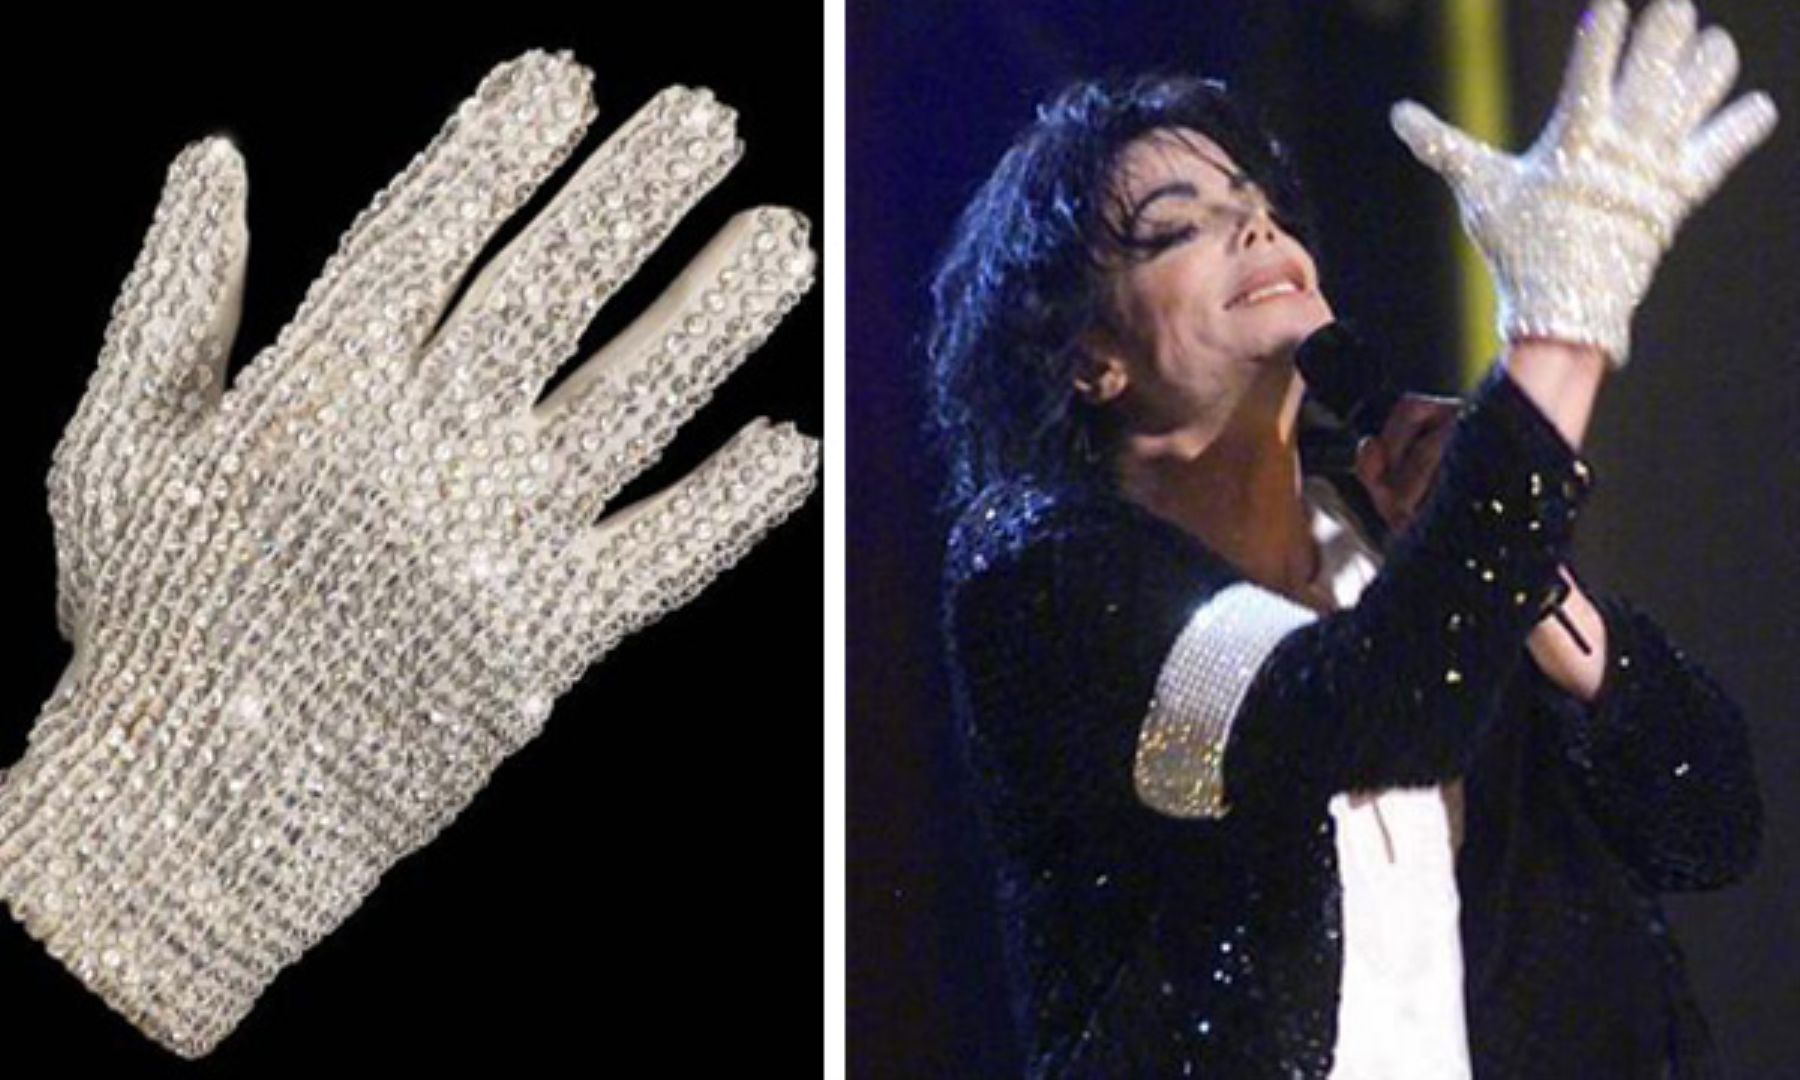 Jackson glove sells for $49,000.